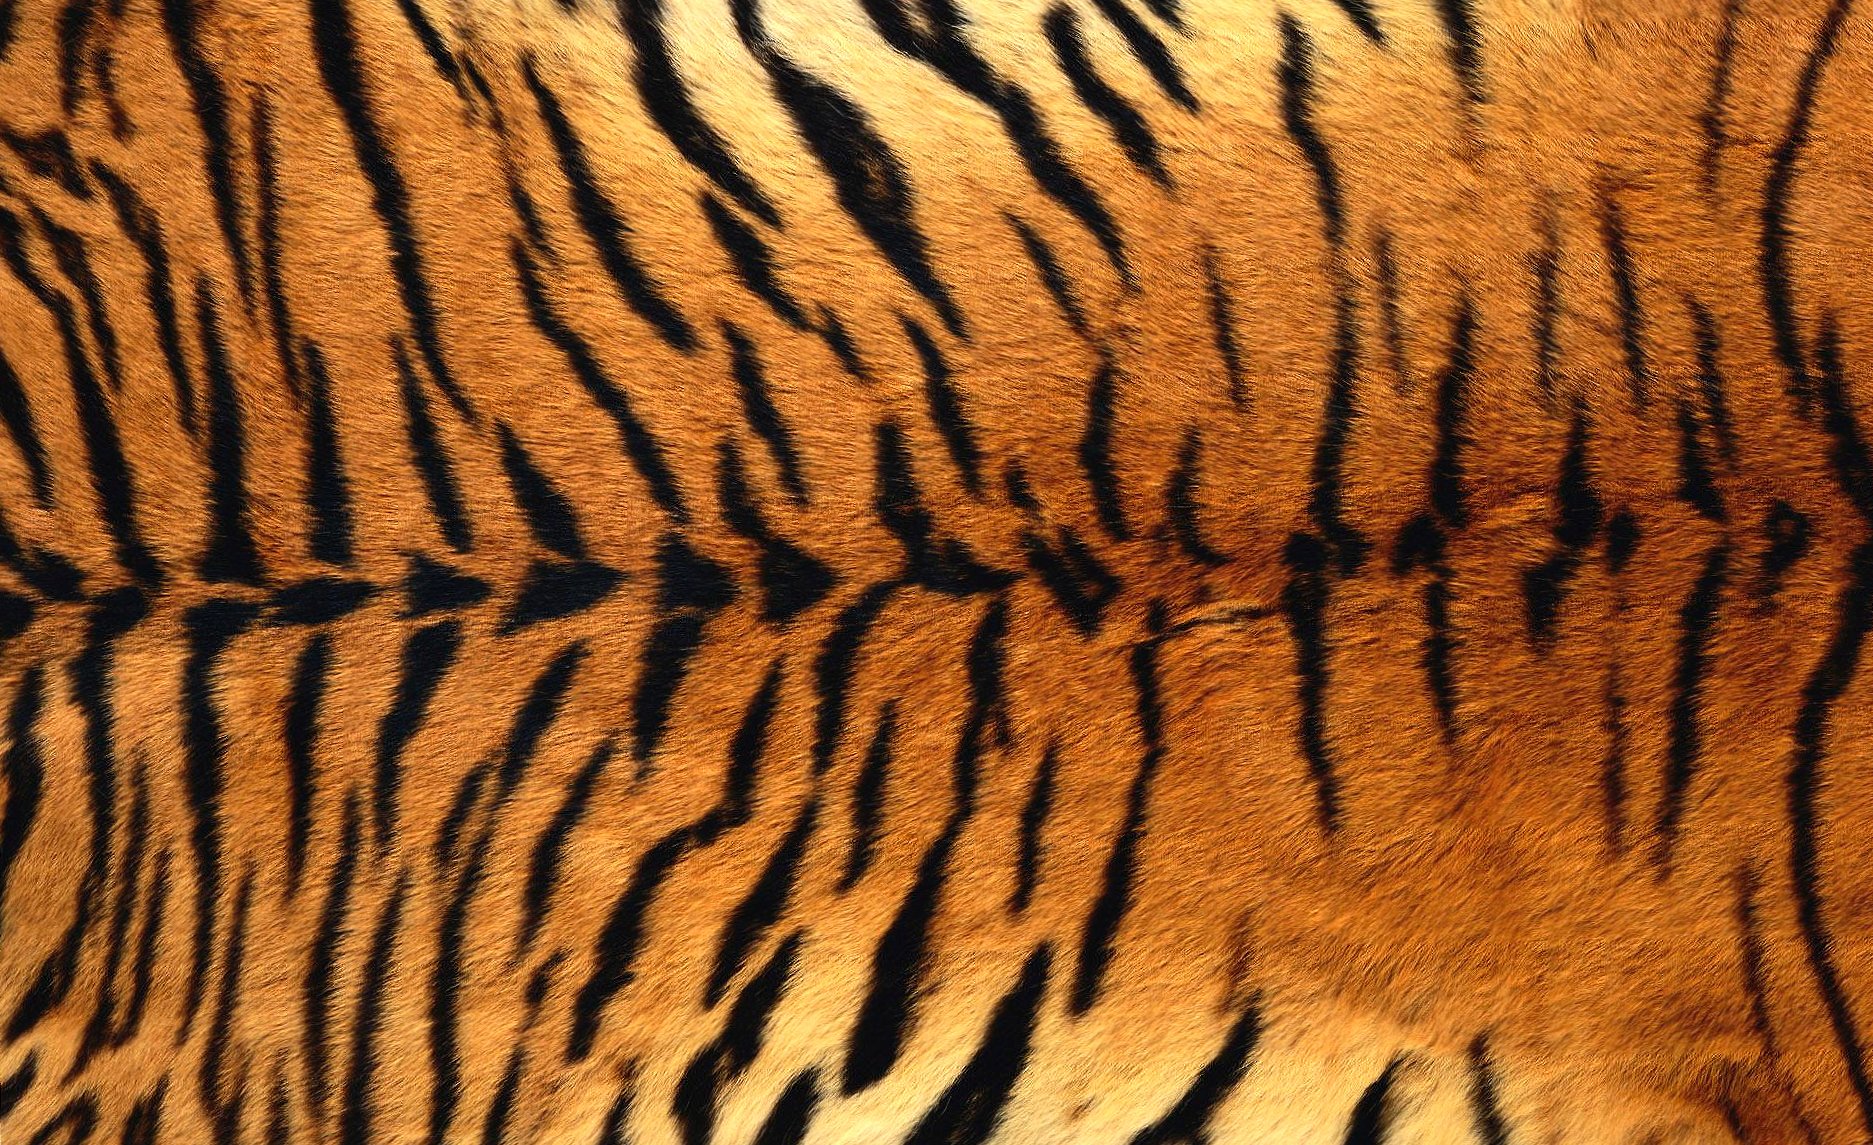 Tiger skin at 1024 x 1024 iPad size wallpapers HD quality